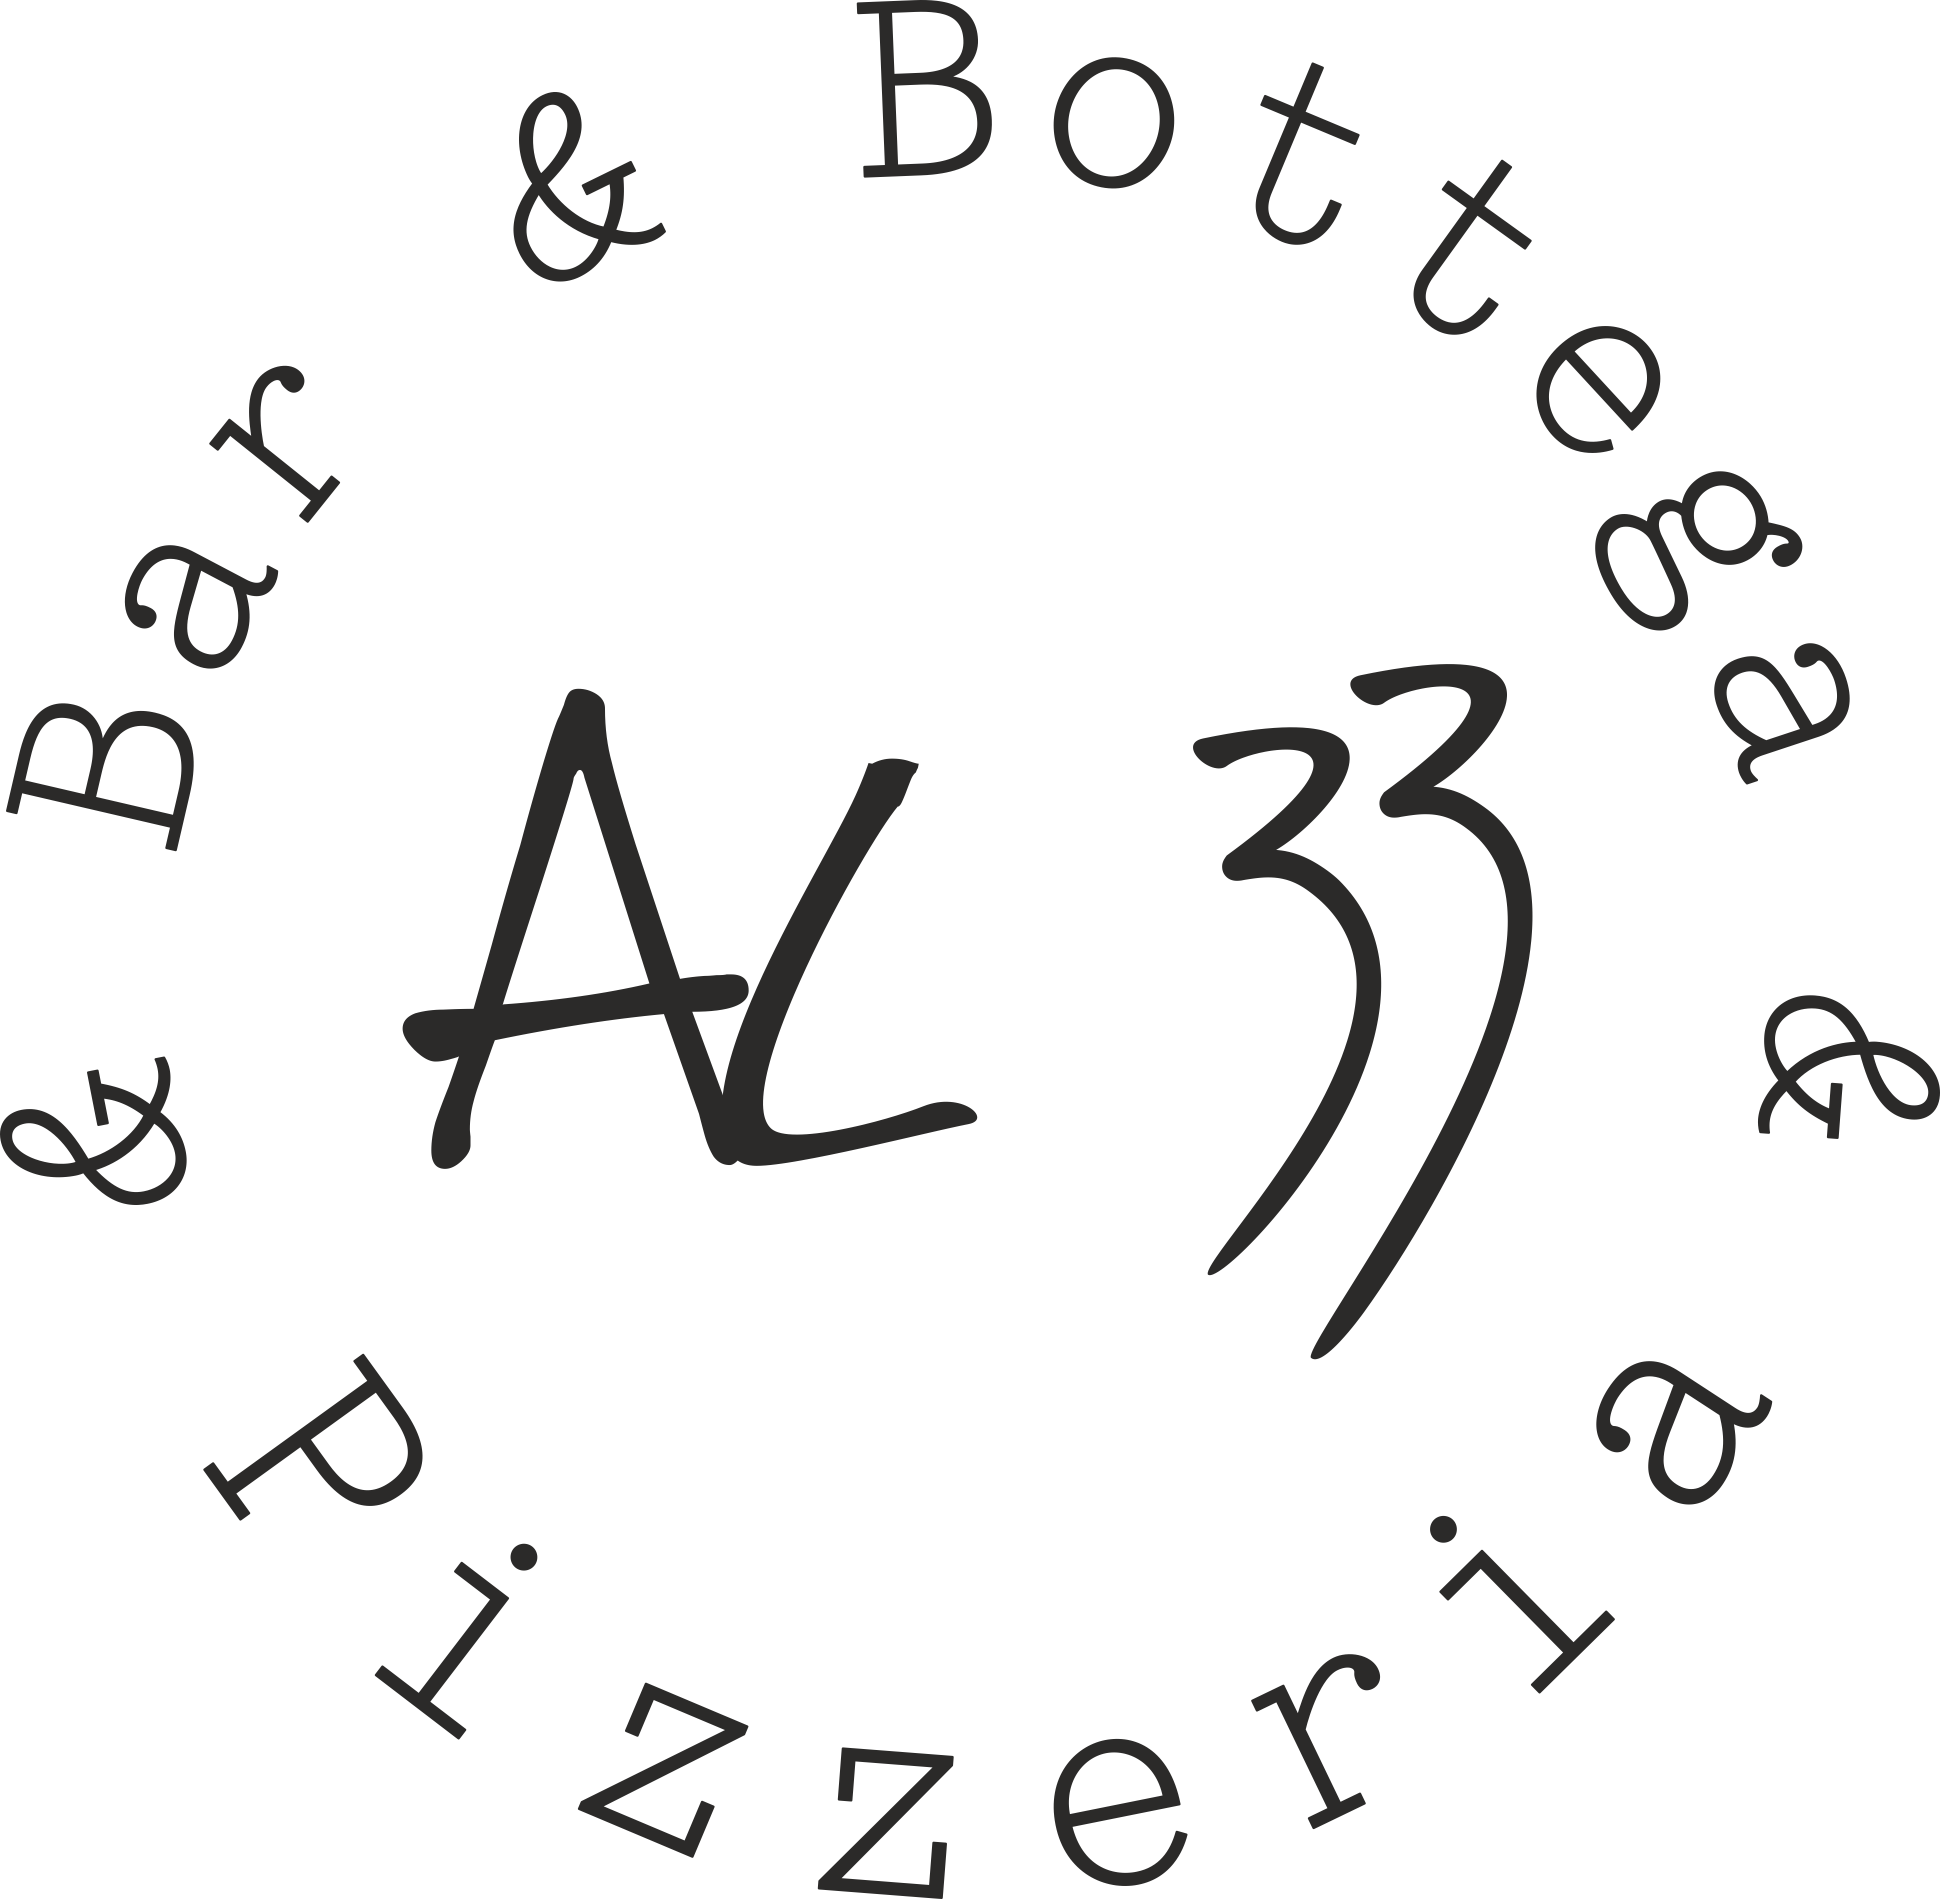 Pizzeria Al 33. Итальянская пиццерия у дома 33